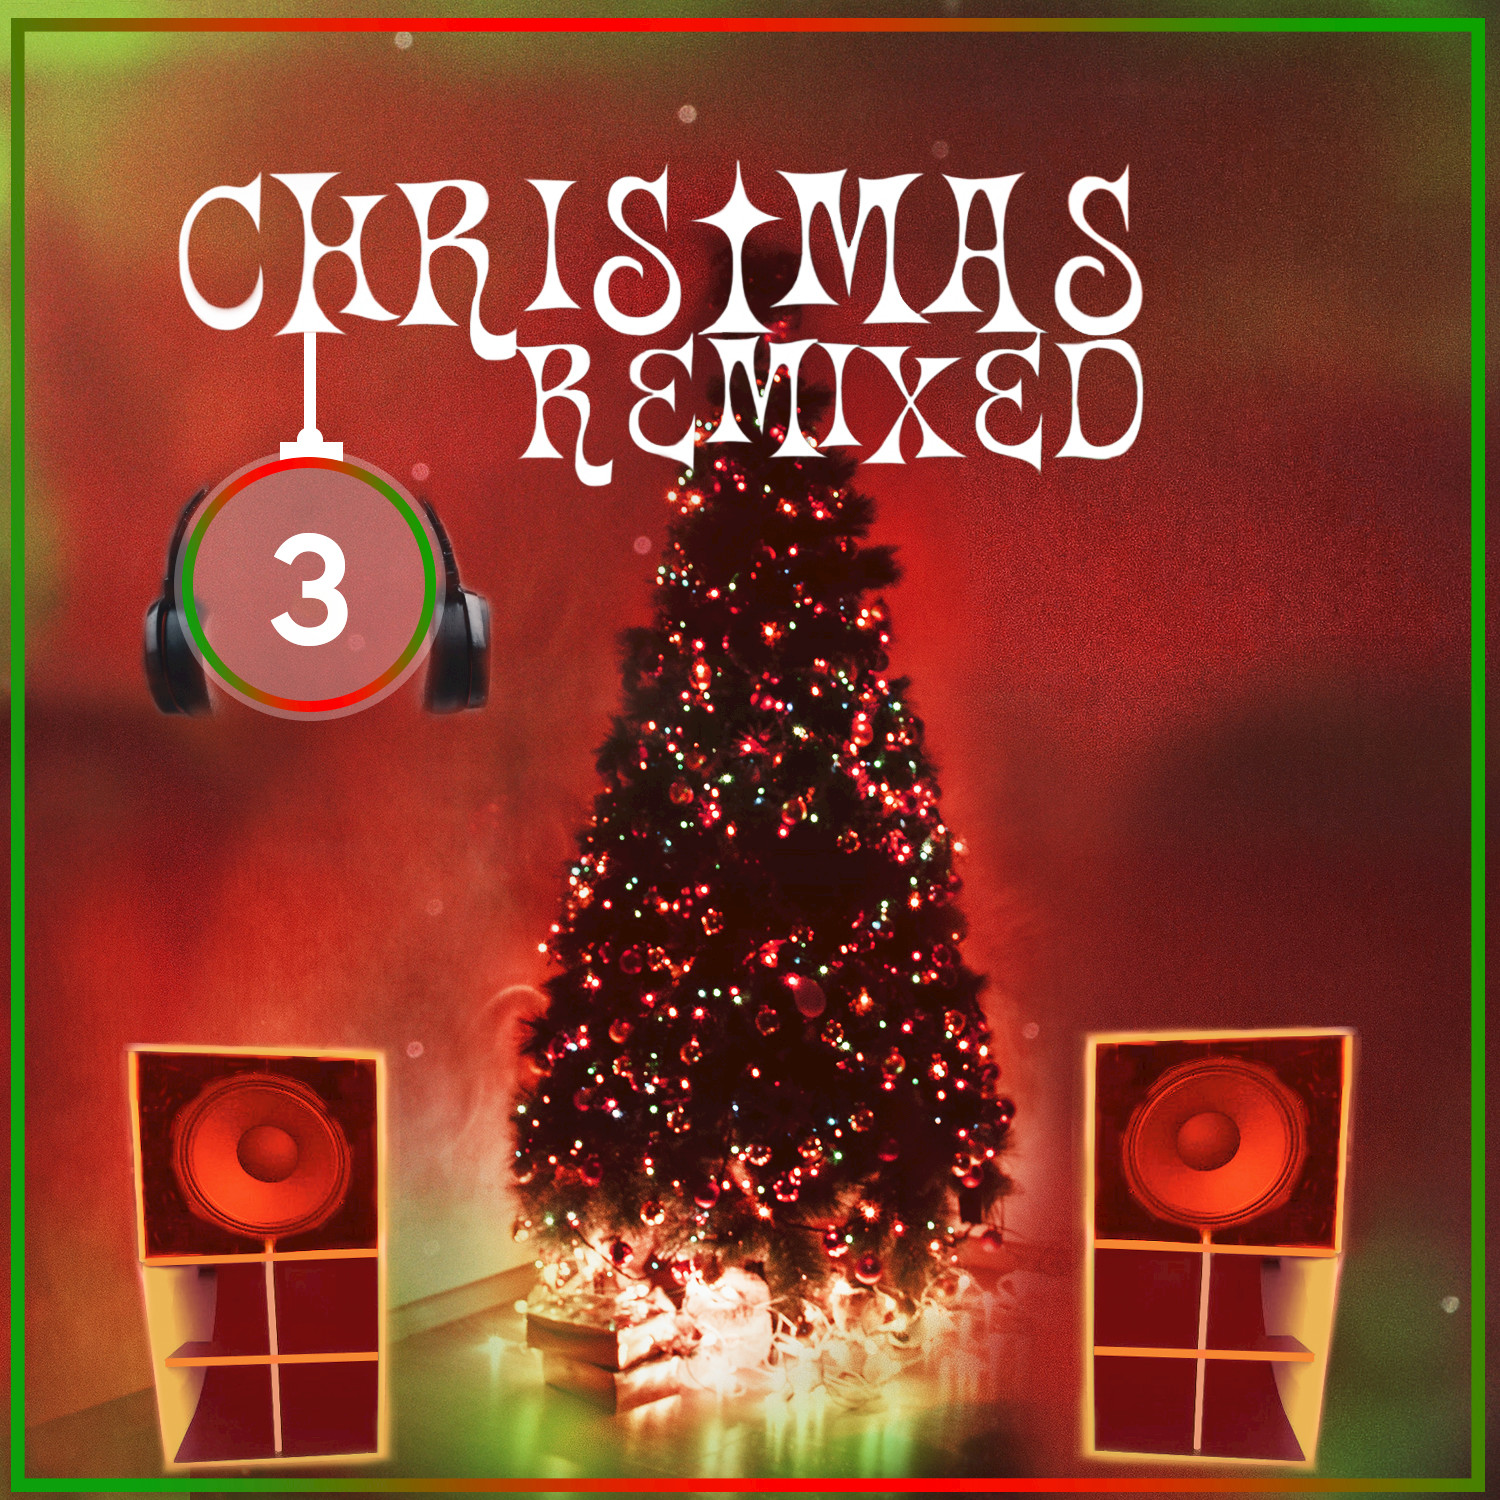 Christmas Remixed 3